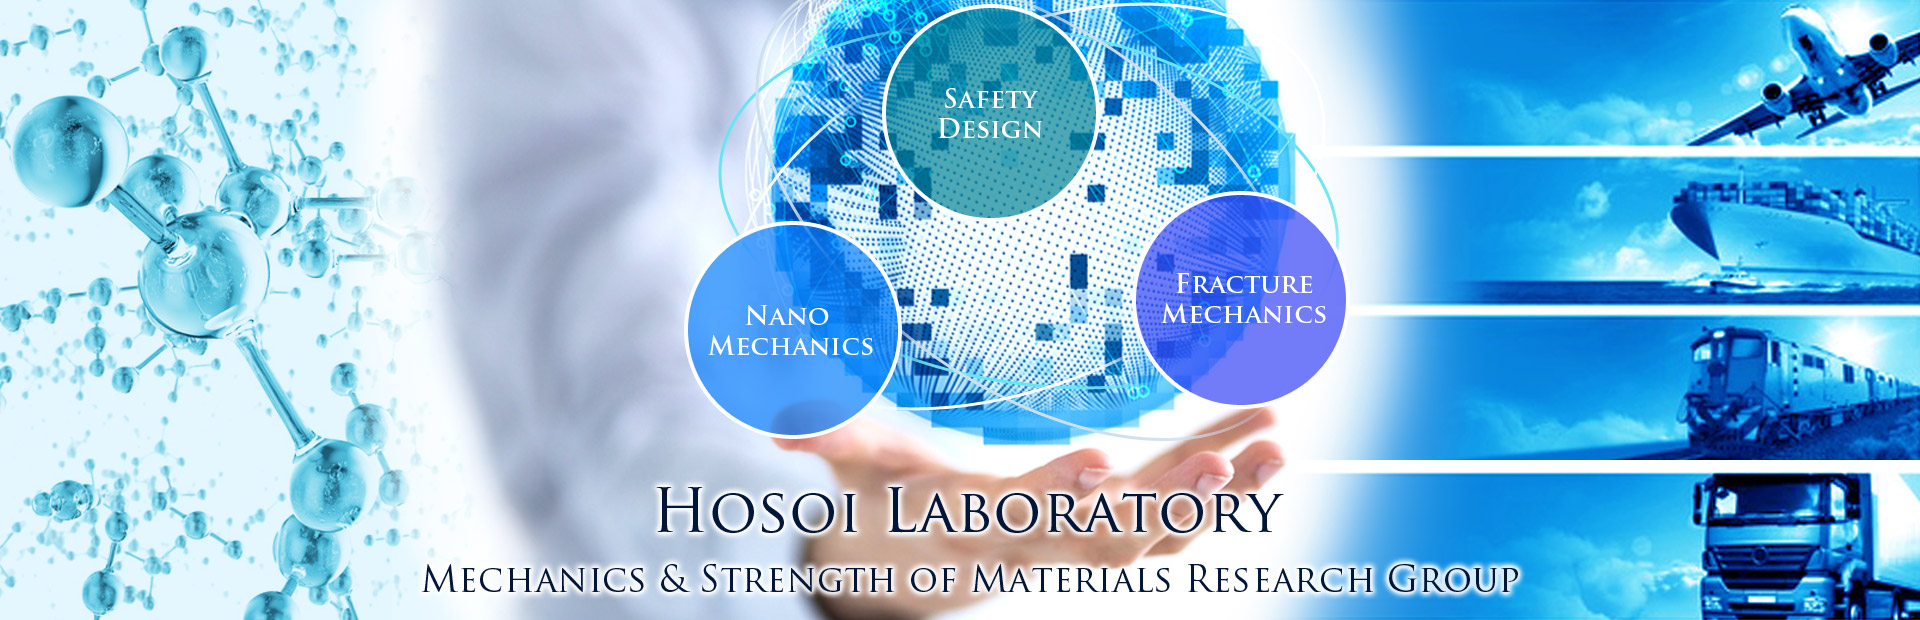 Hosoi Laboratory, Mechanics & Strength of Materials Research Group